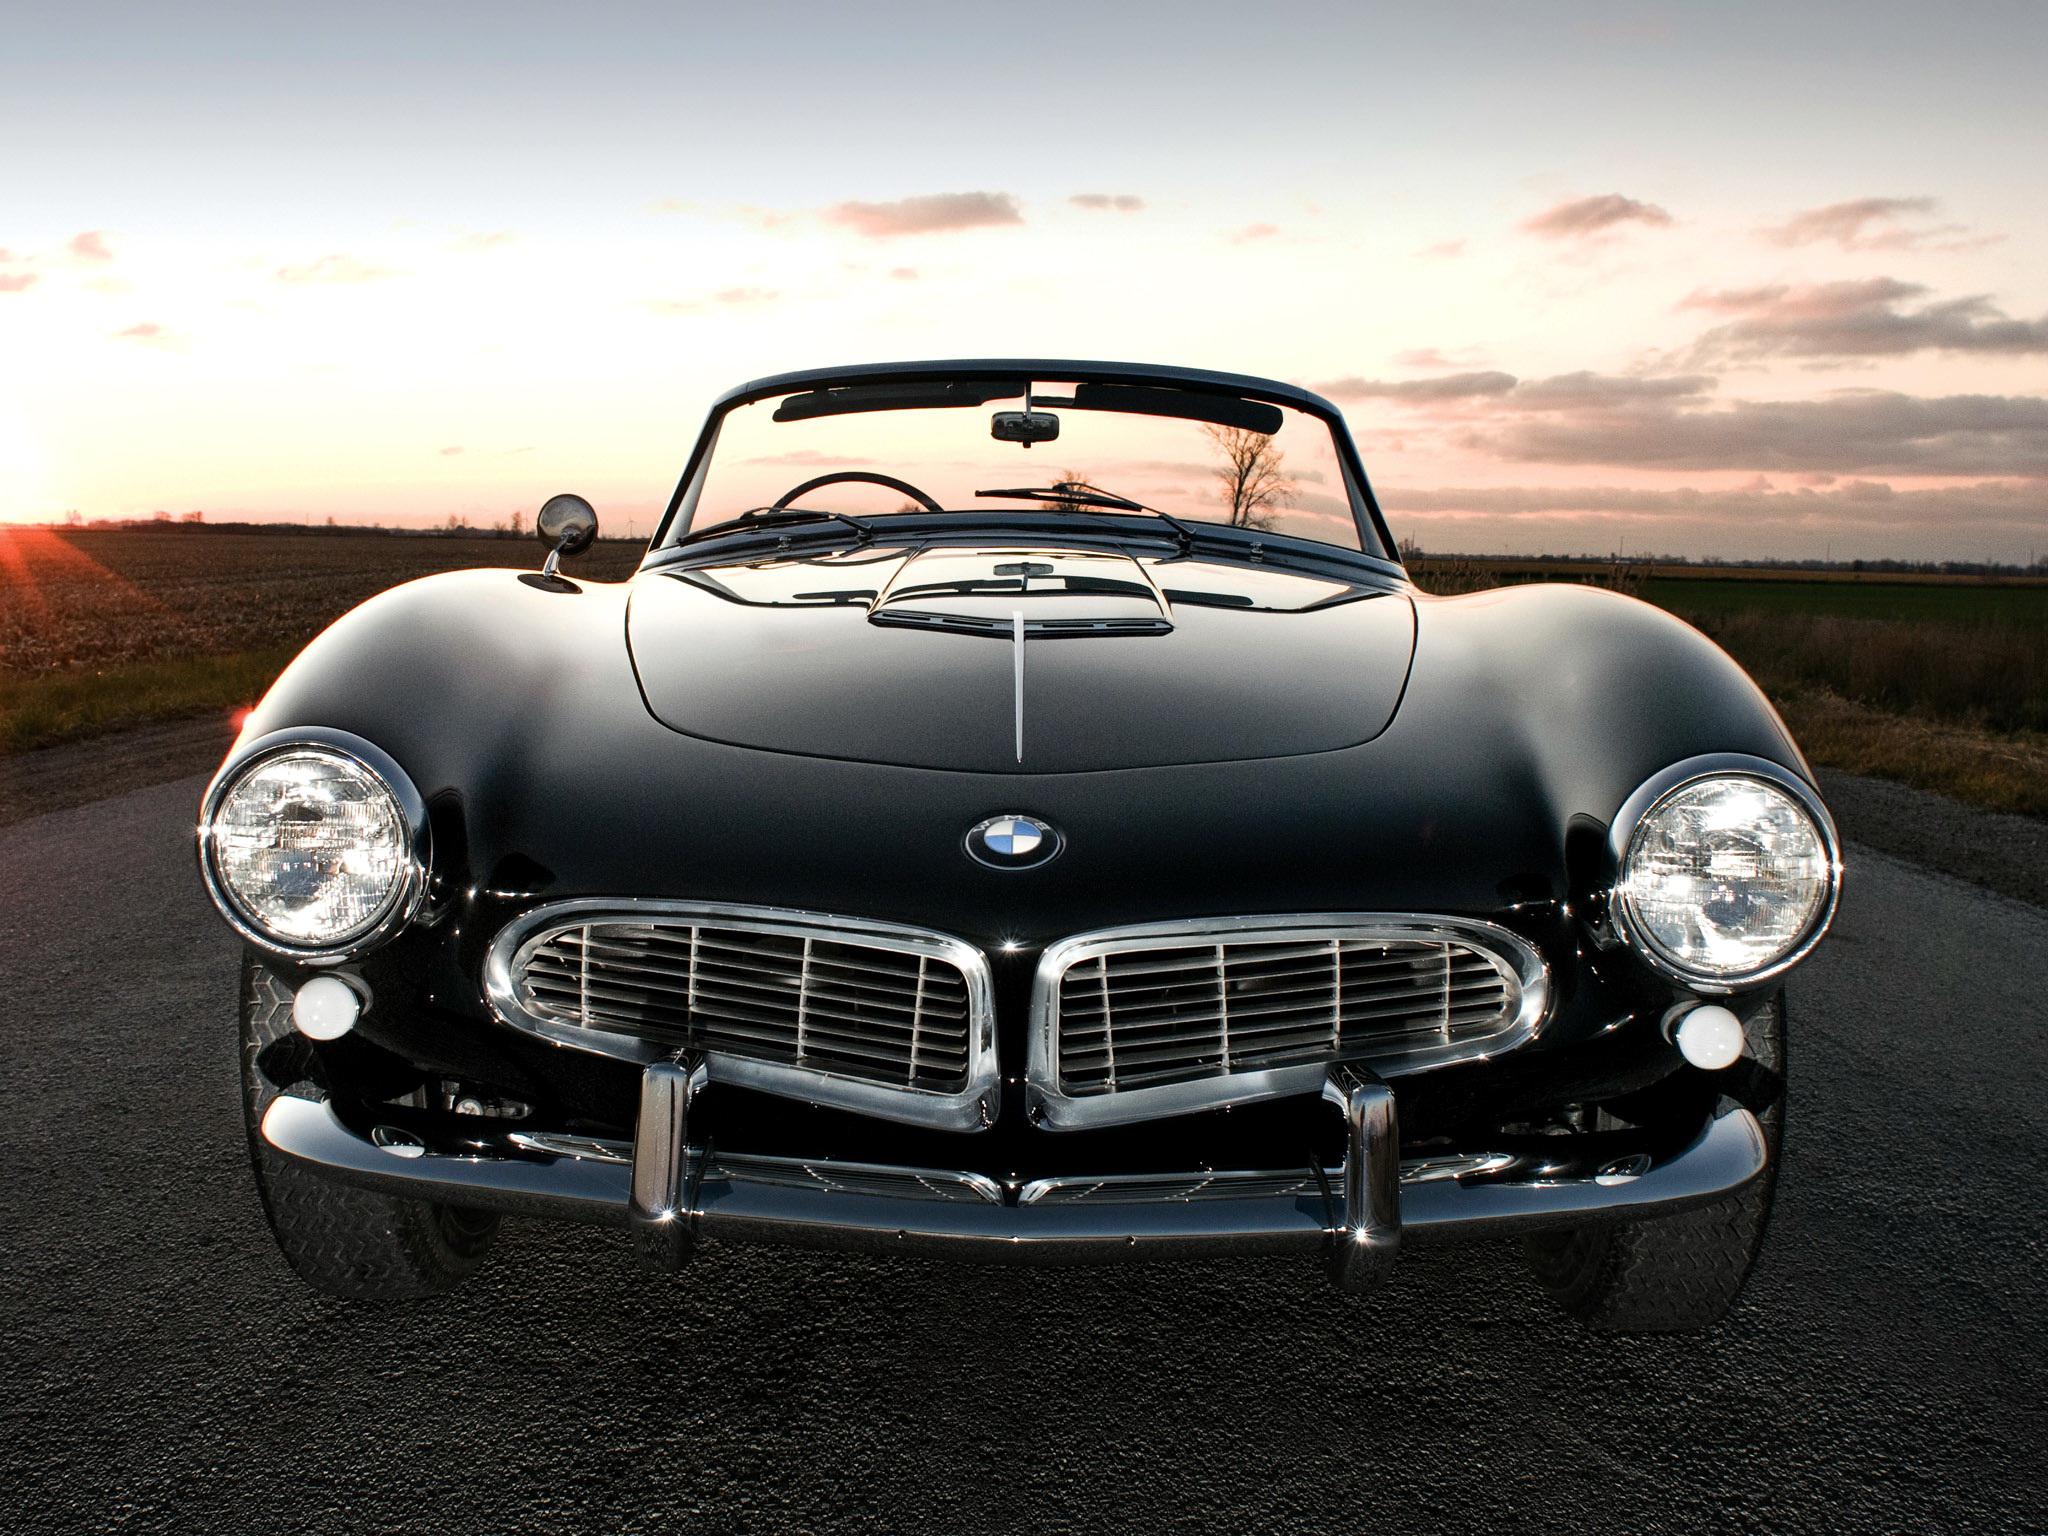 Vintage Elegance: The Iconic 1956 BMW 507 Series 1